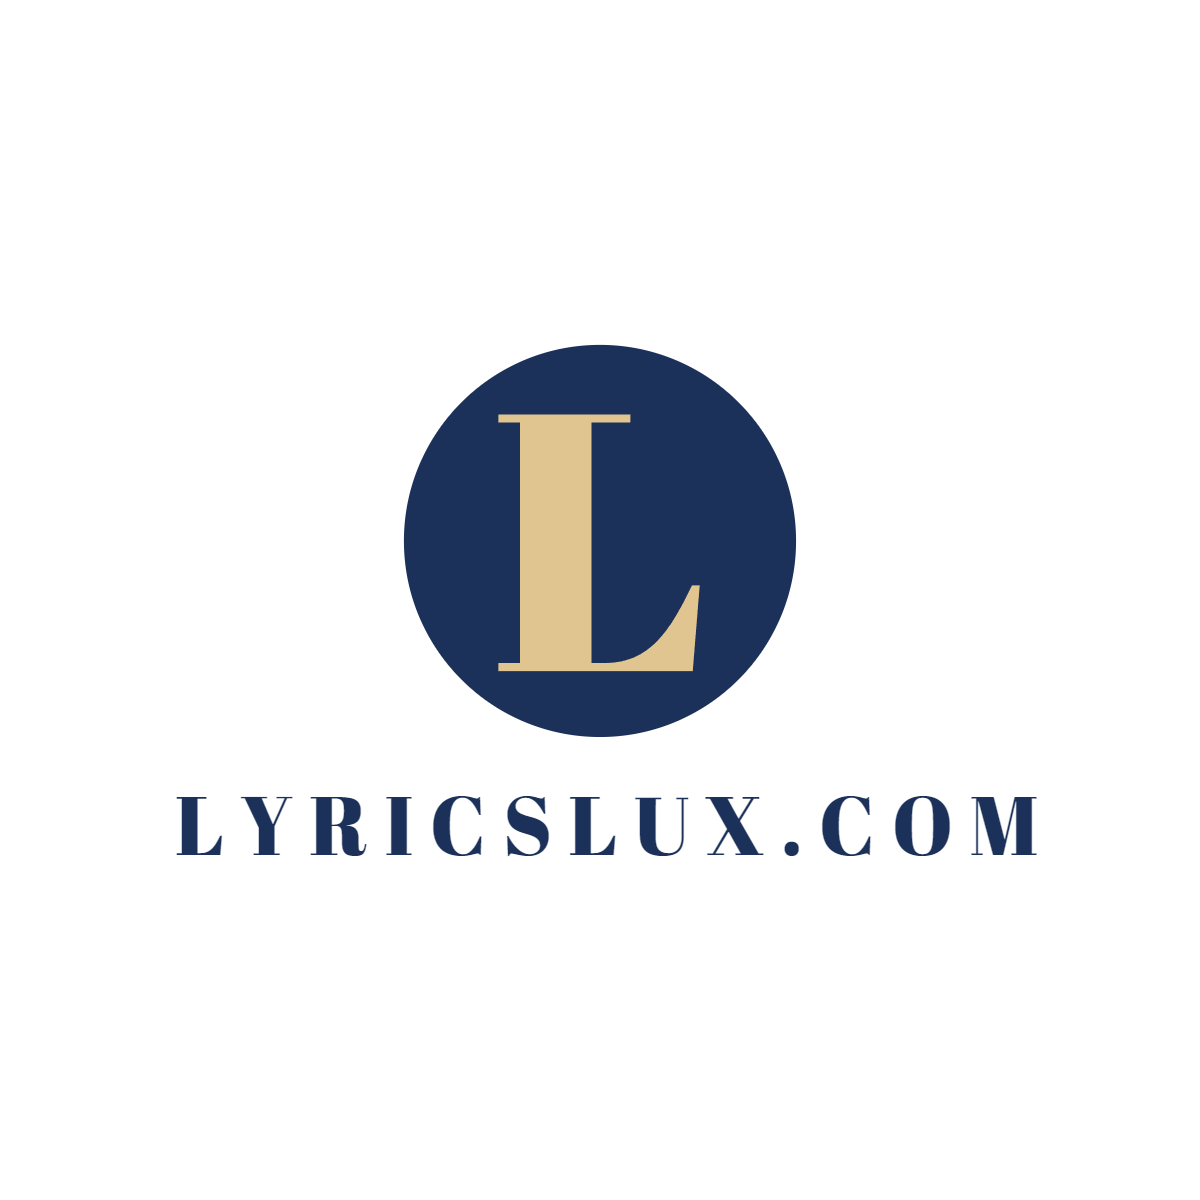 lyricslux.com- Your Destination for Musical Expression